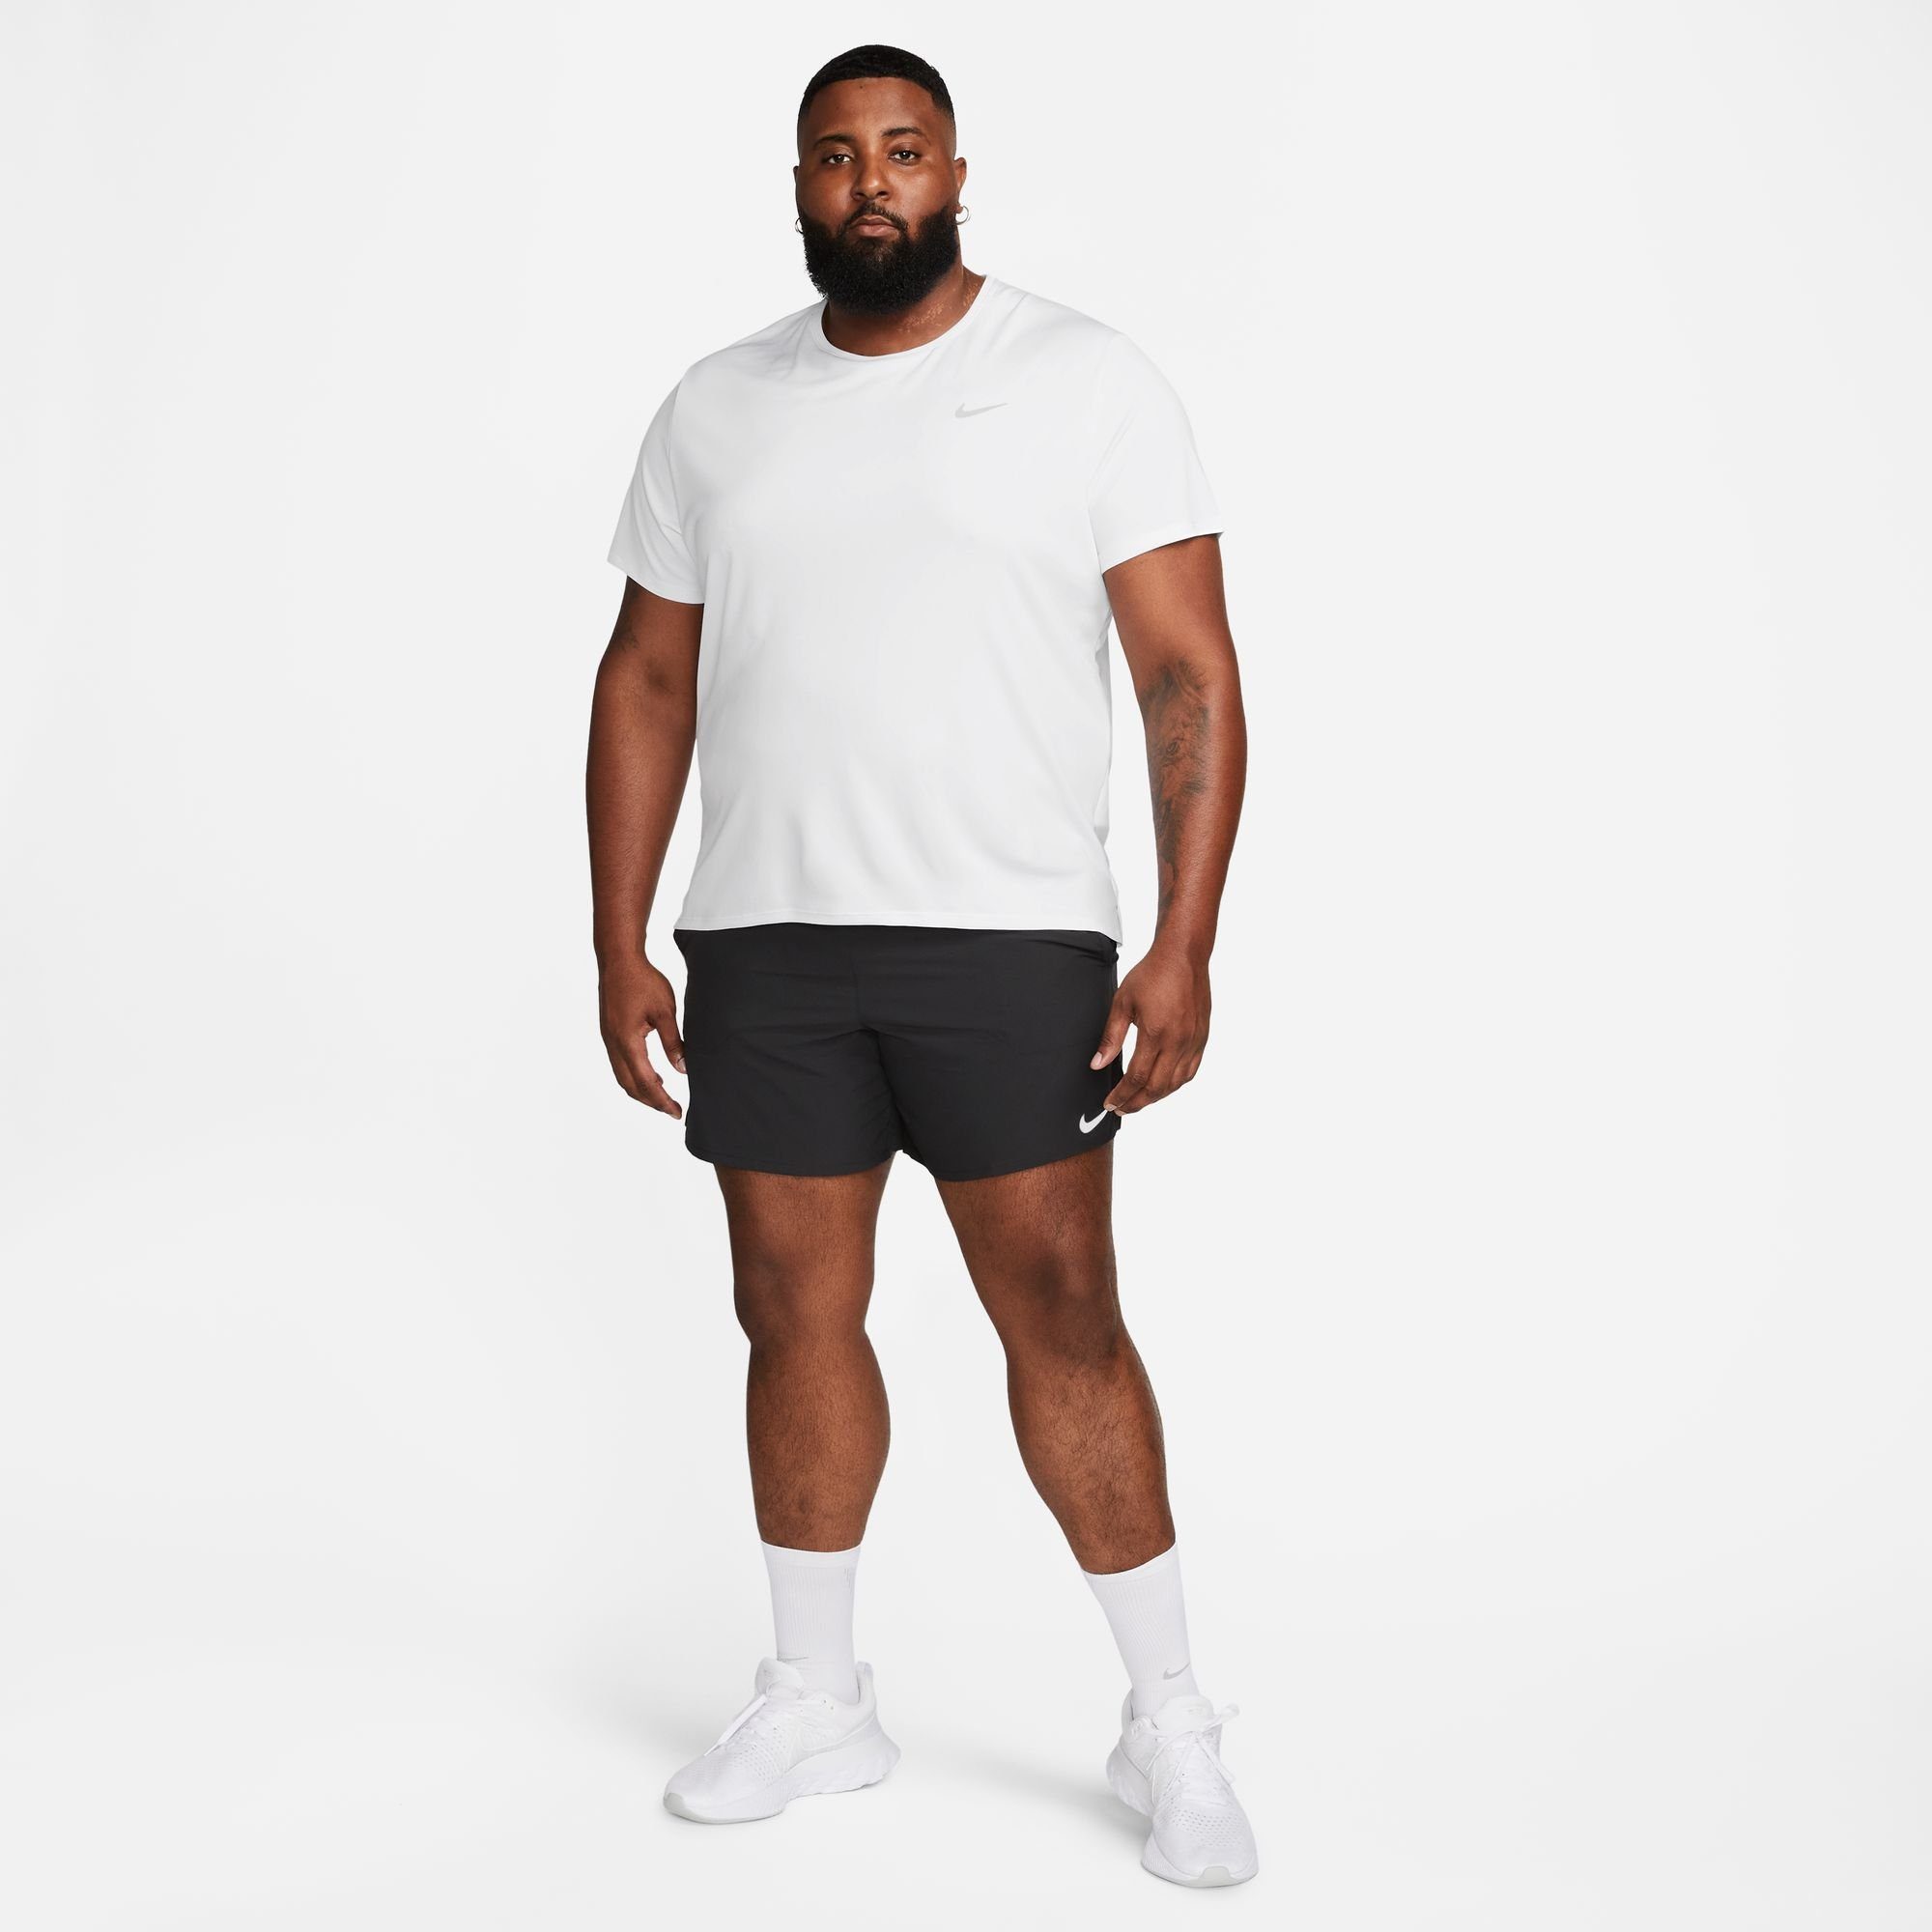 MEN'S WHITE/REFLECTIVE MILER Nike RUNNING TOP UV Laufshirt DRI-FIT SHORT-SLEEVE SILV